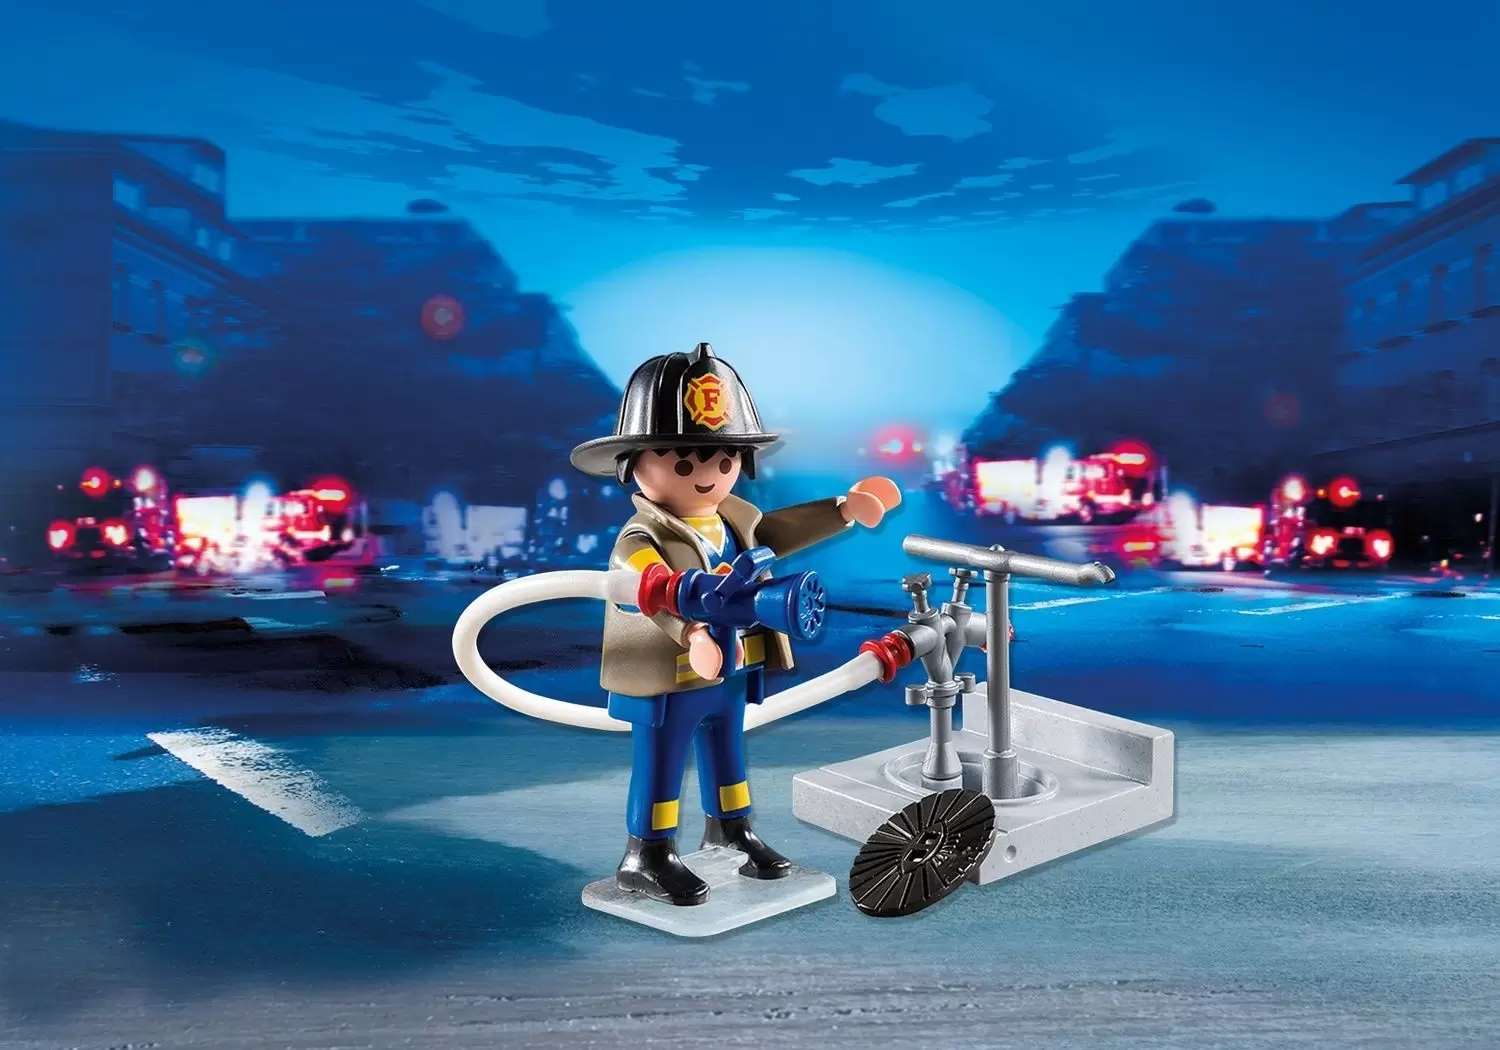 Playmobil SpecialPlus - Fireman with Hose